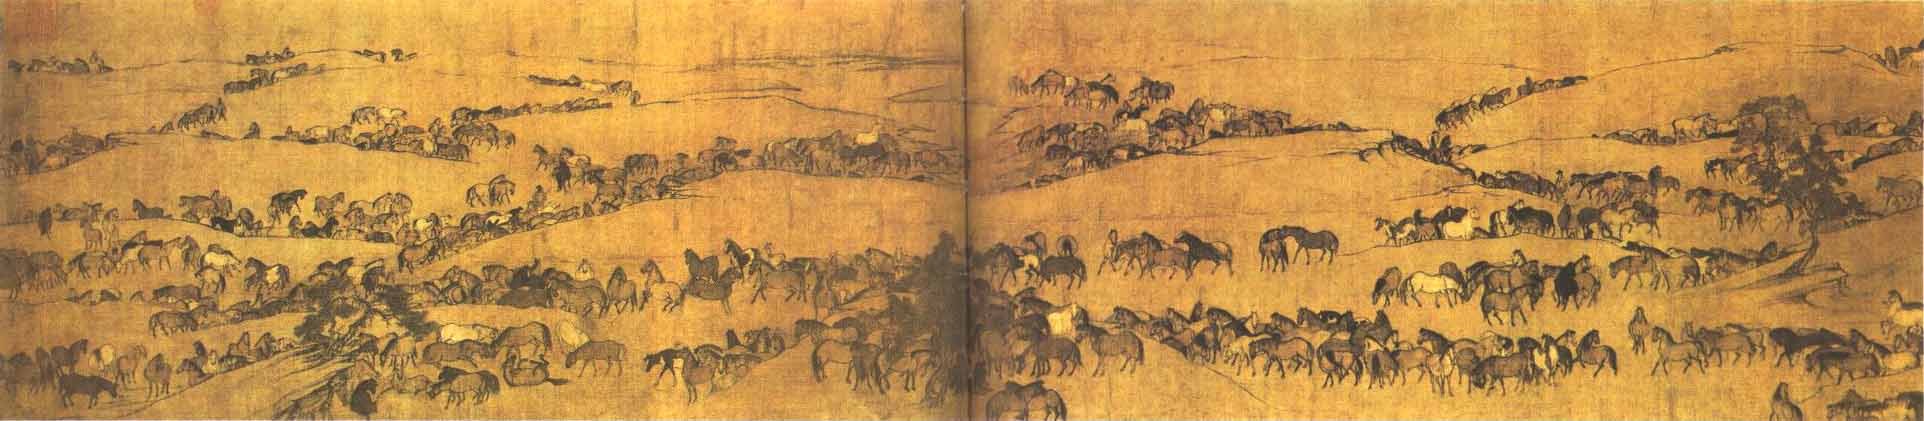 A Copy of Wei Yan's Painting of Herds, Li Gonglin